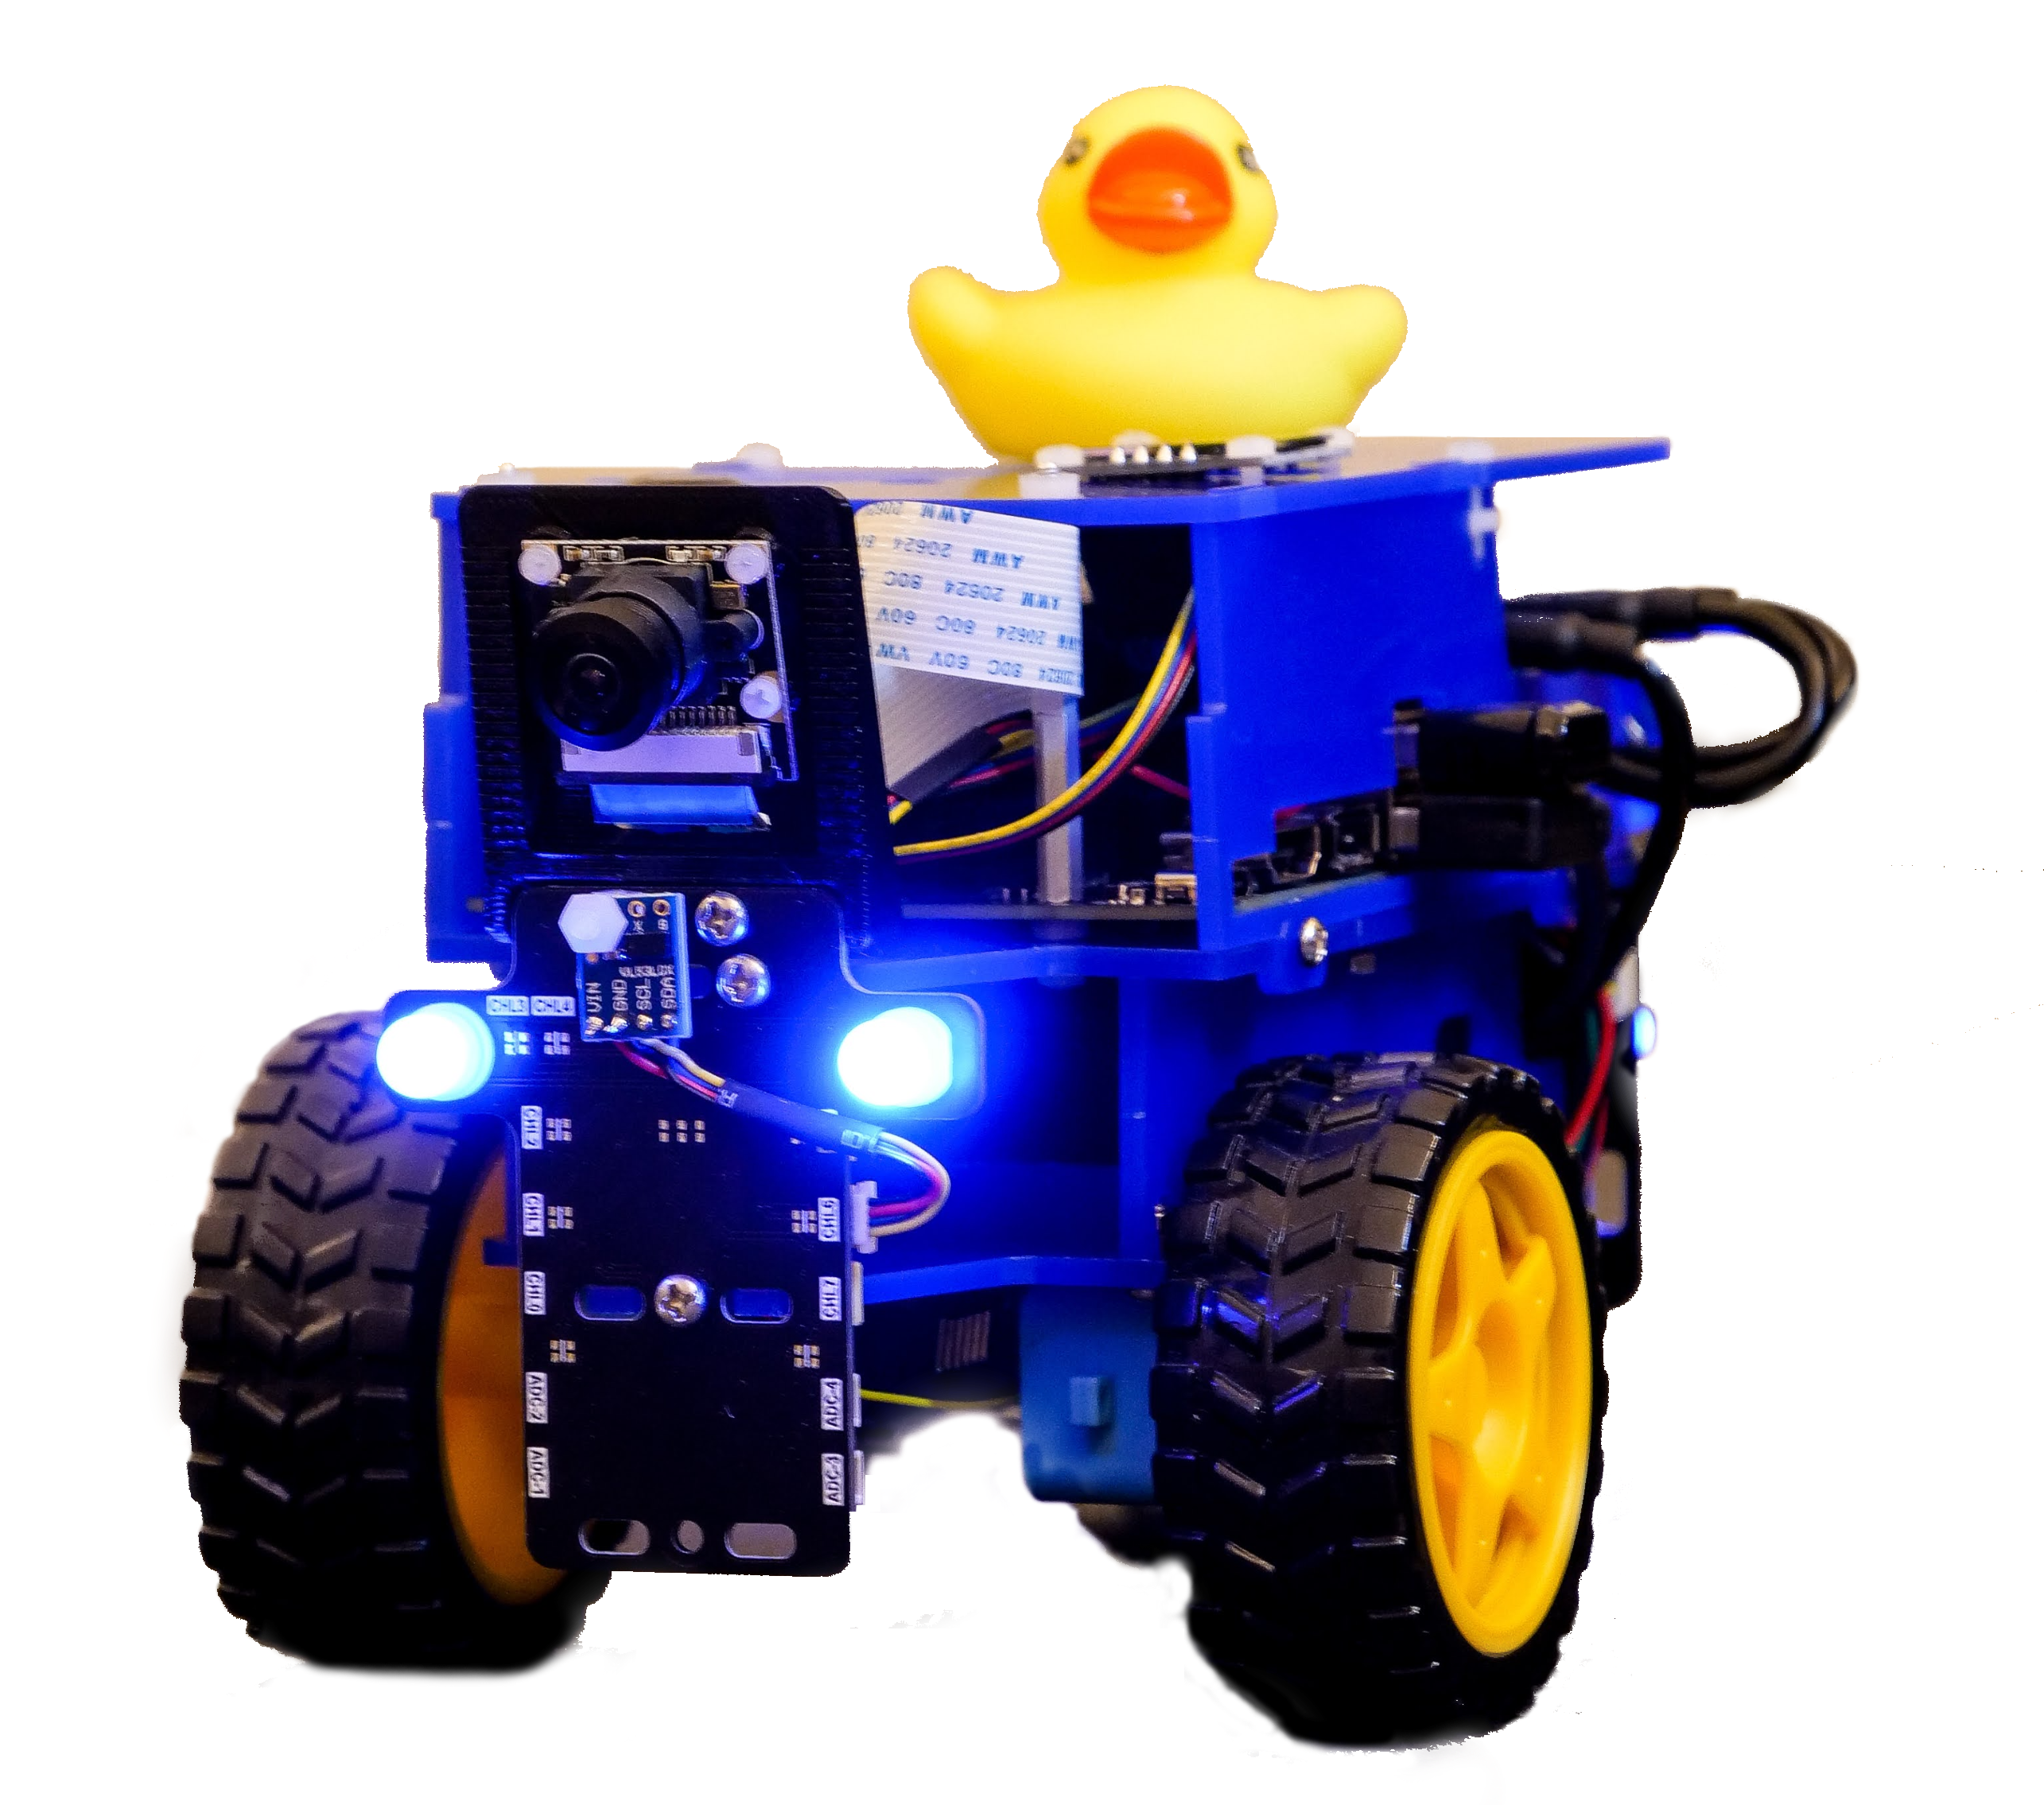 DuckieTown Duckiebot OKdo